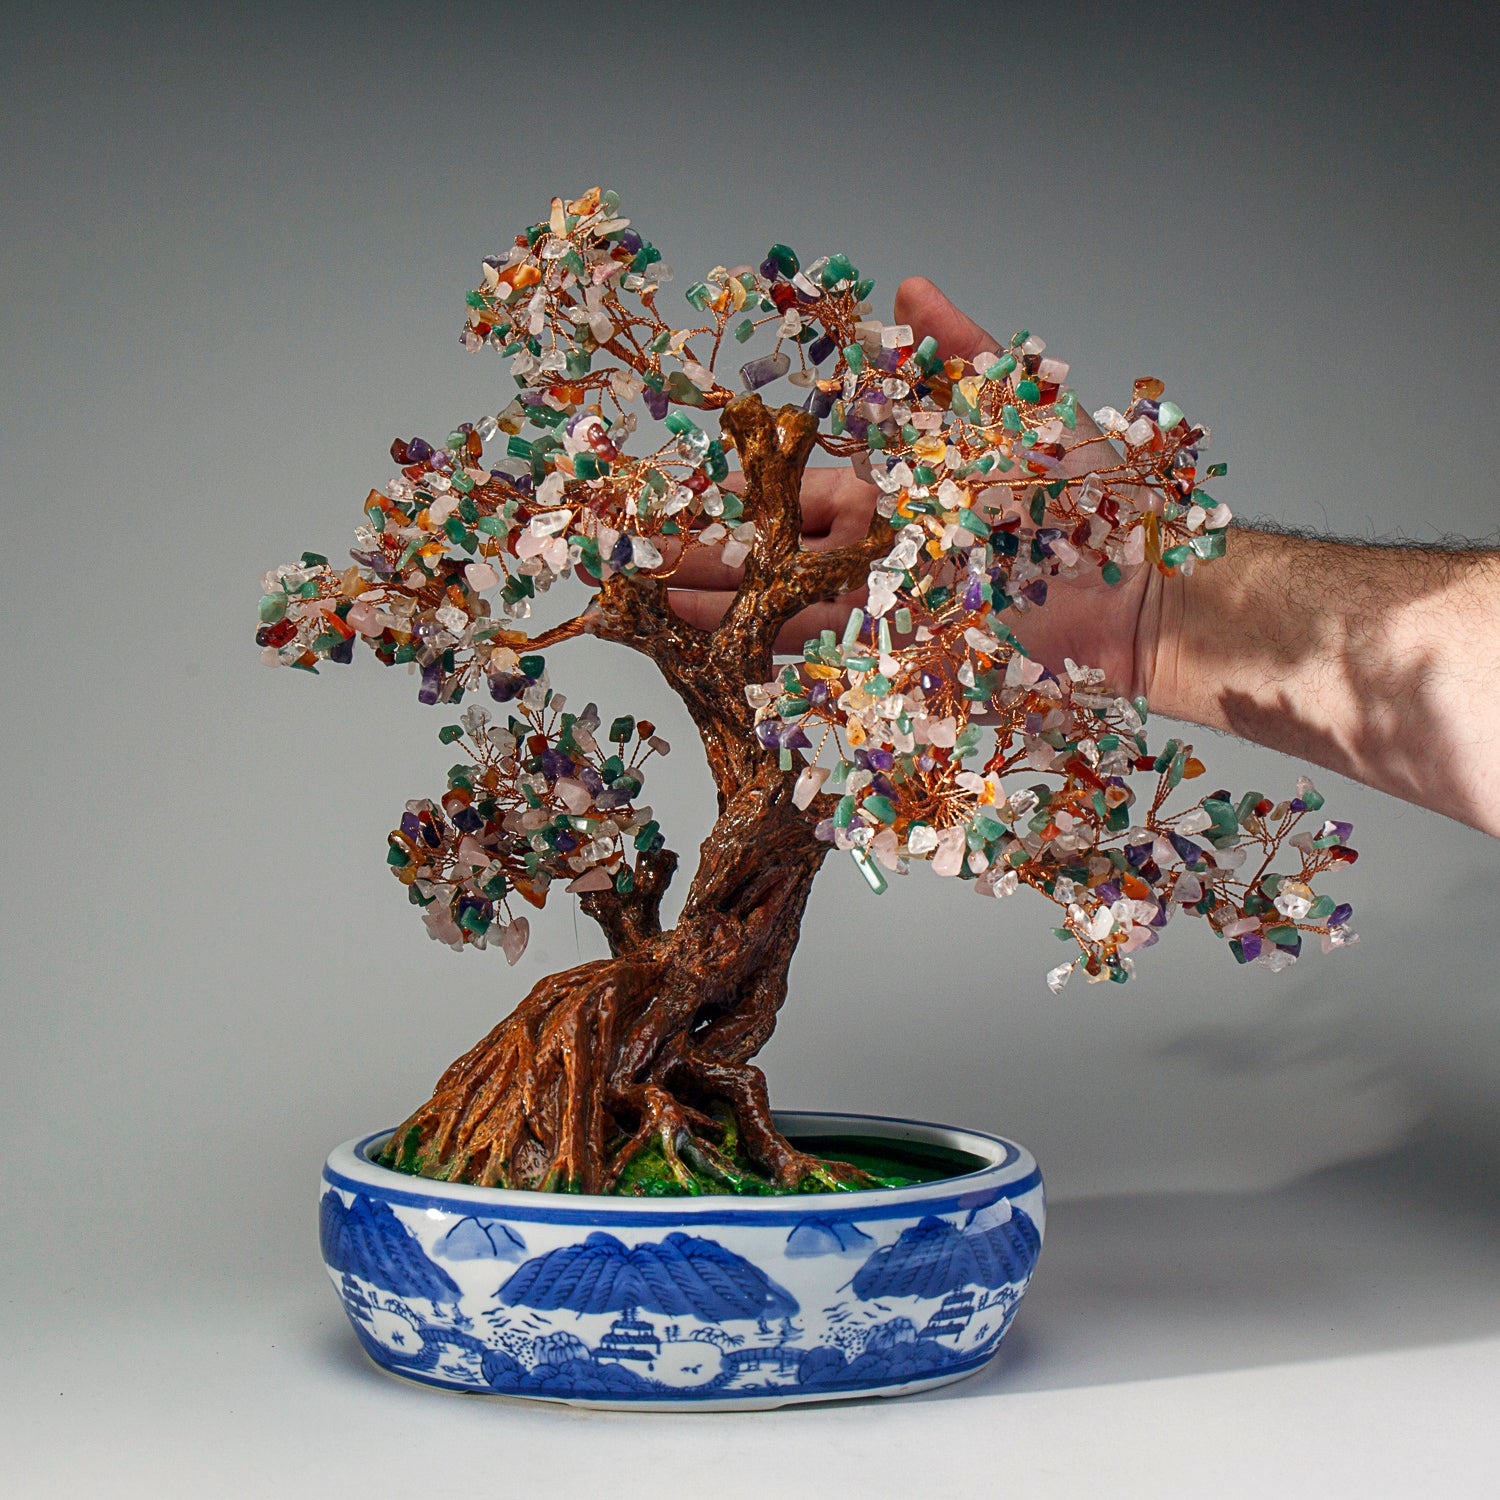 Genuine Multi Gemstone Bonsai Tree in Oval Ceramic Pot (14” Tall)